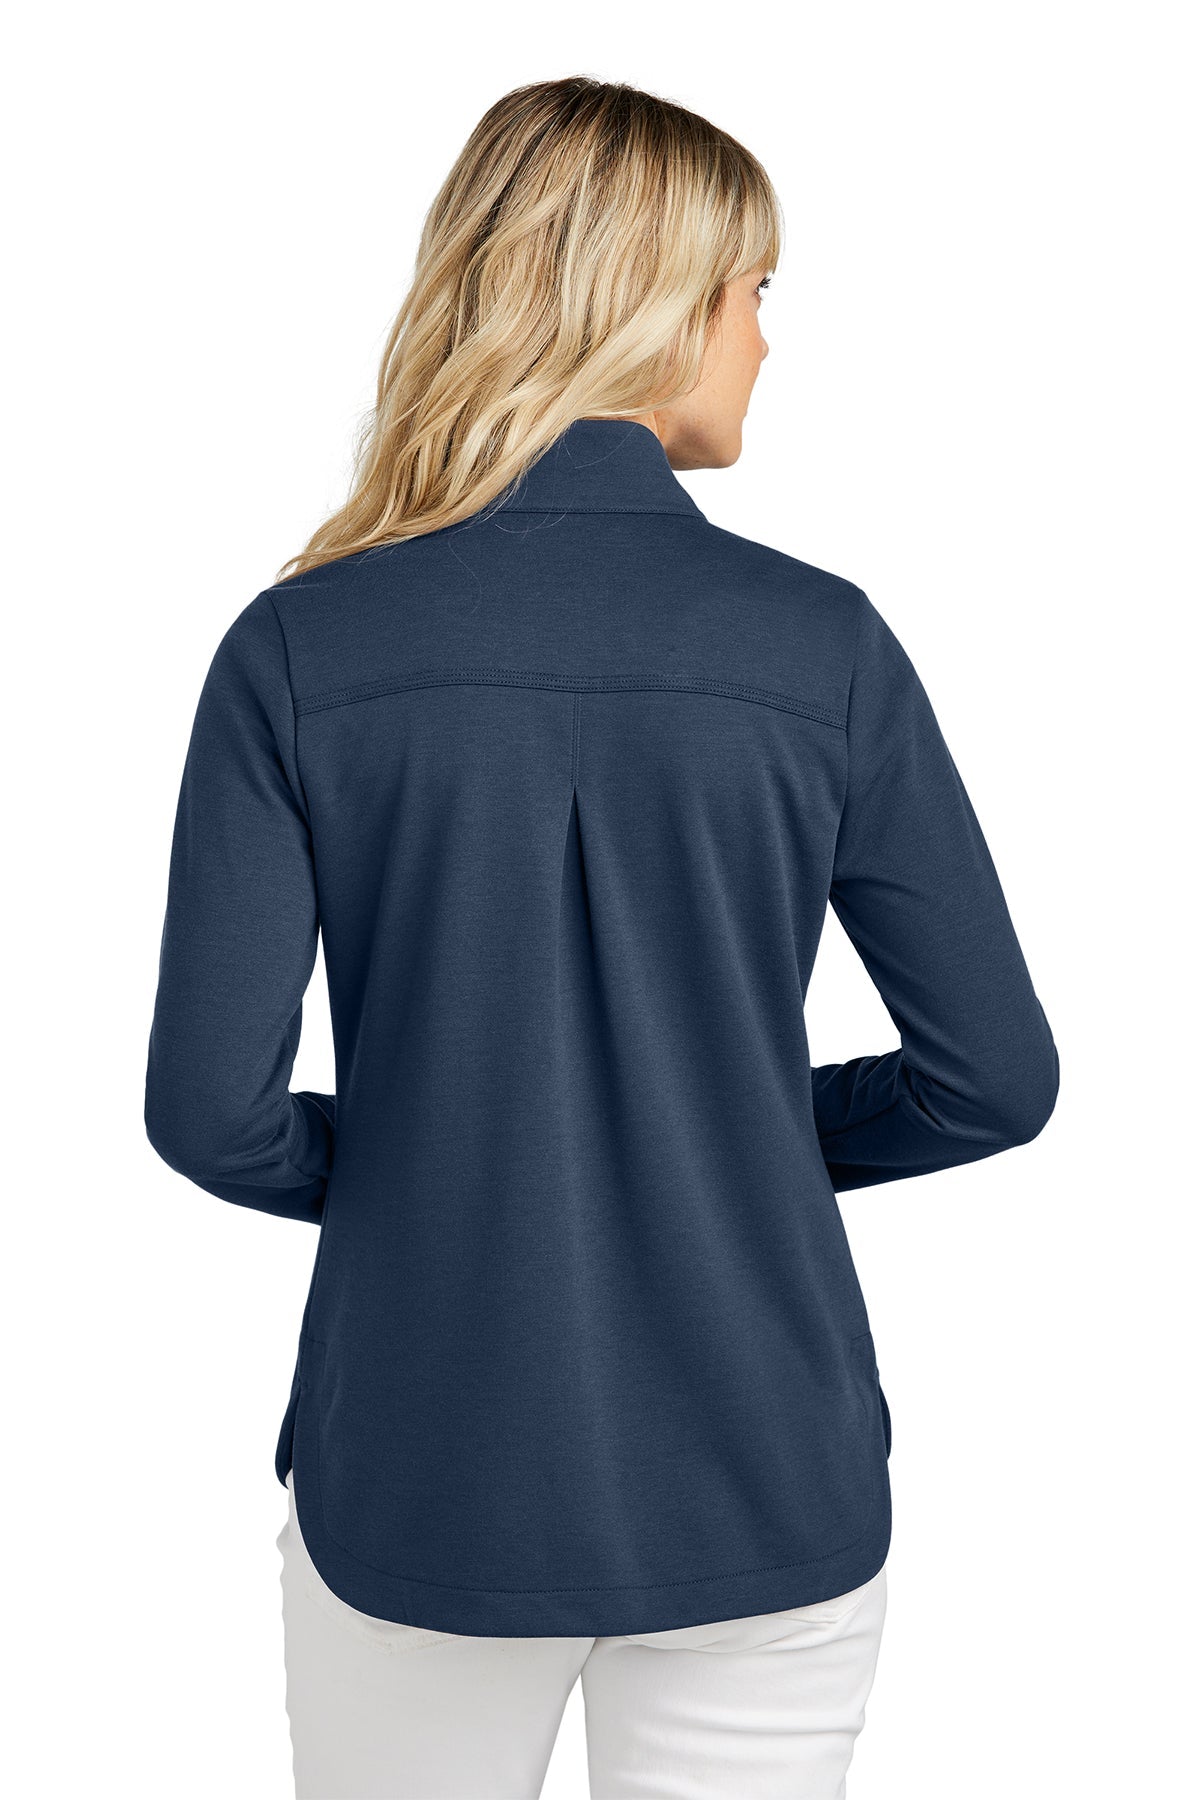 TravisMathew Ladies Coveside Custom Zip Sweatshirts, Blue Nights